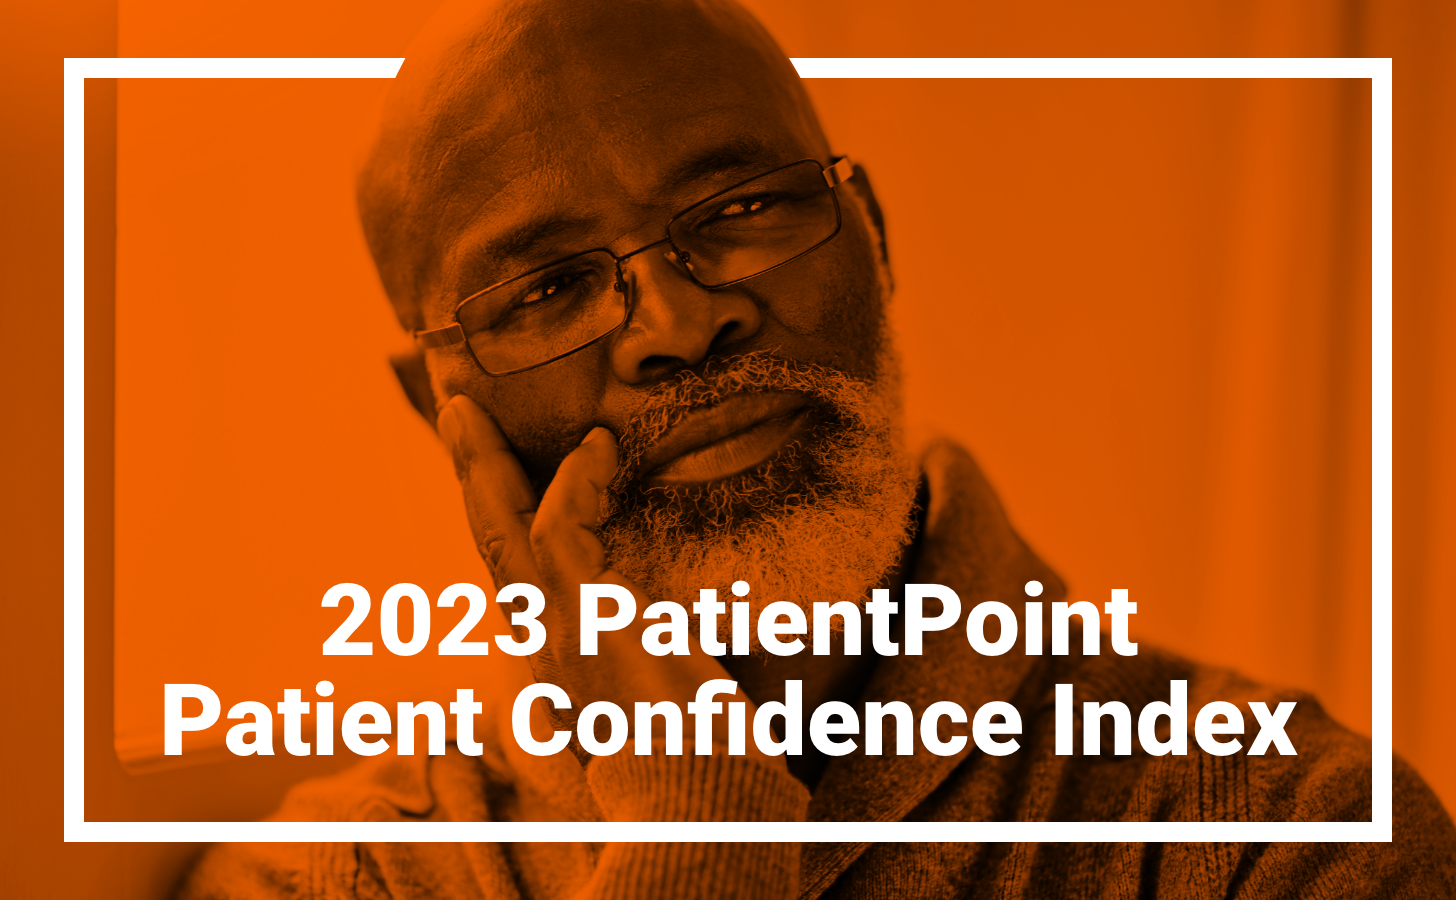 2023 Patient Confidence Index